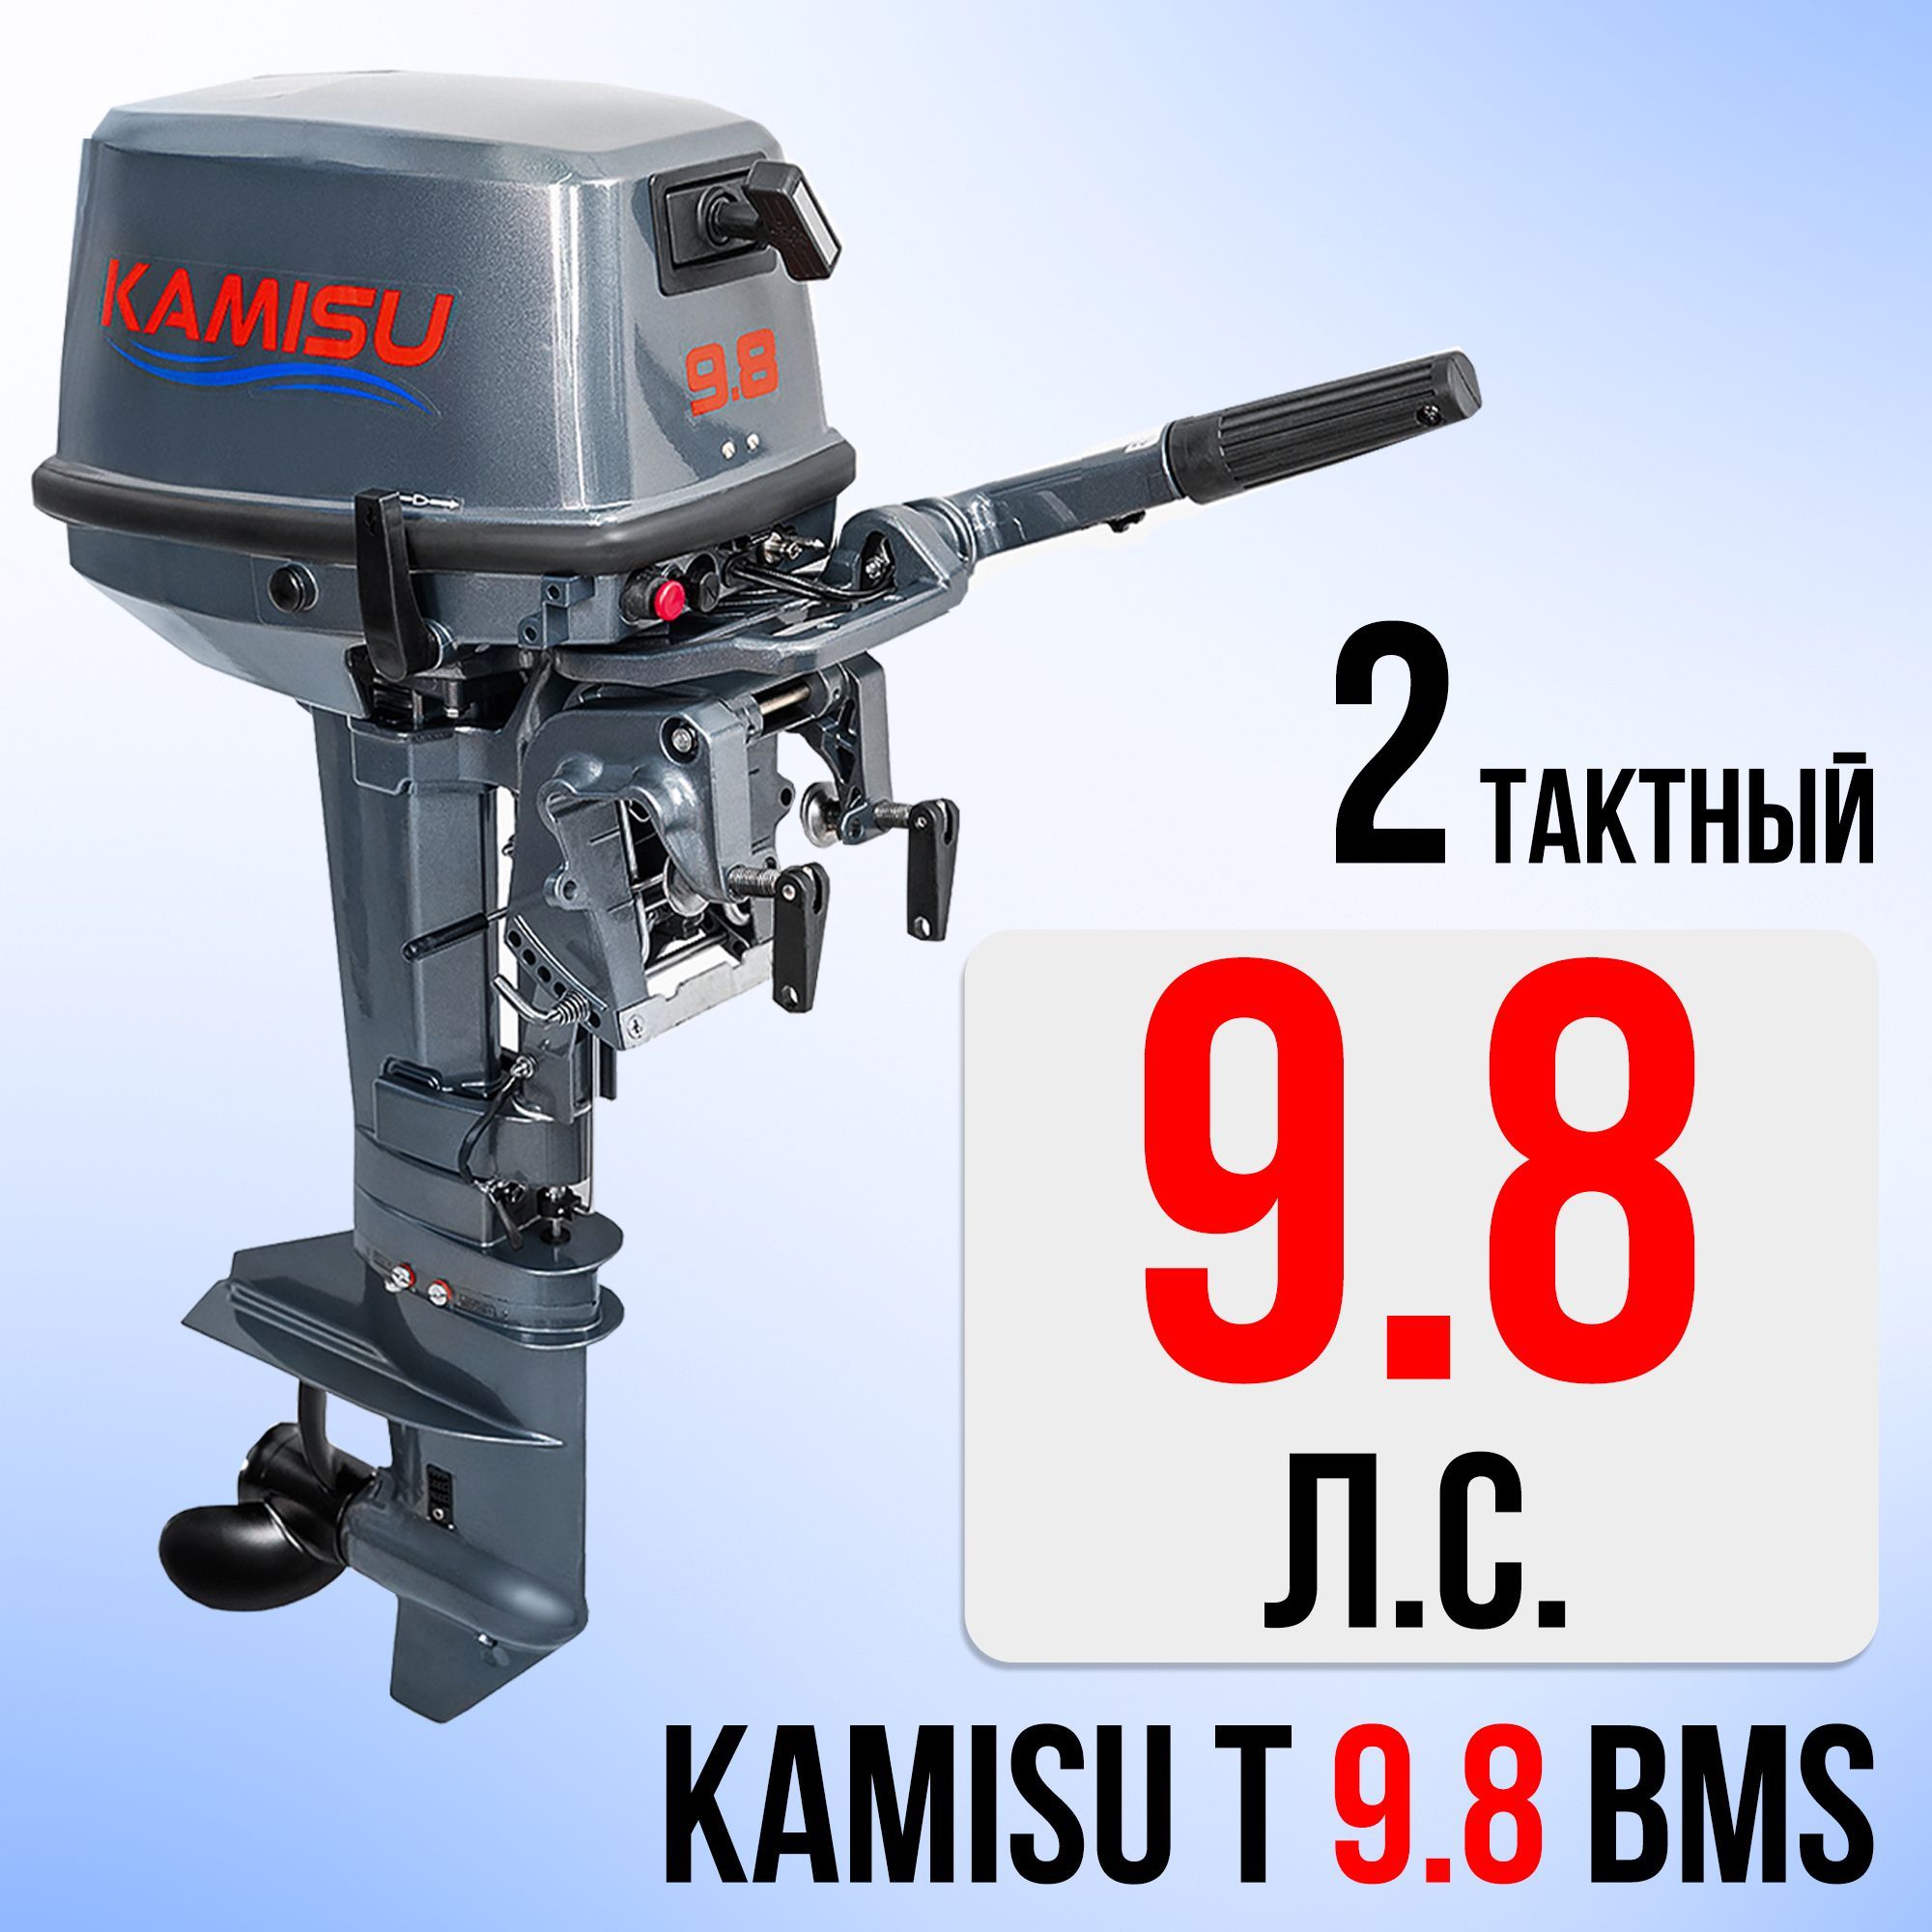 Kamisu t 9.8. Лодочный мотор Kamisu t9.8BMS.